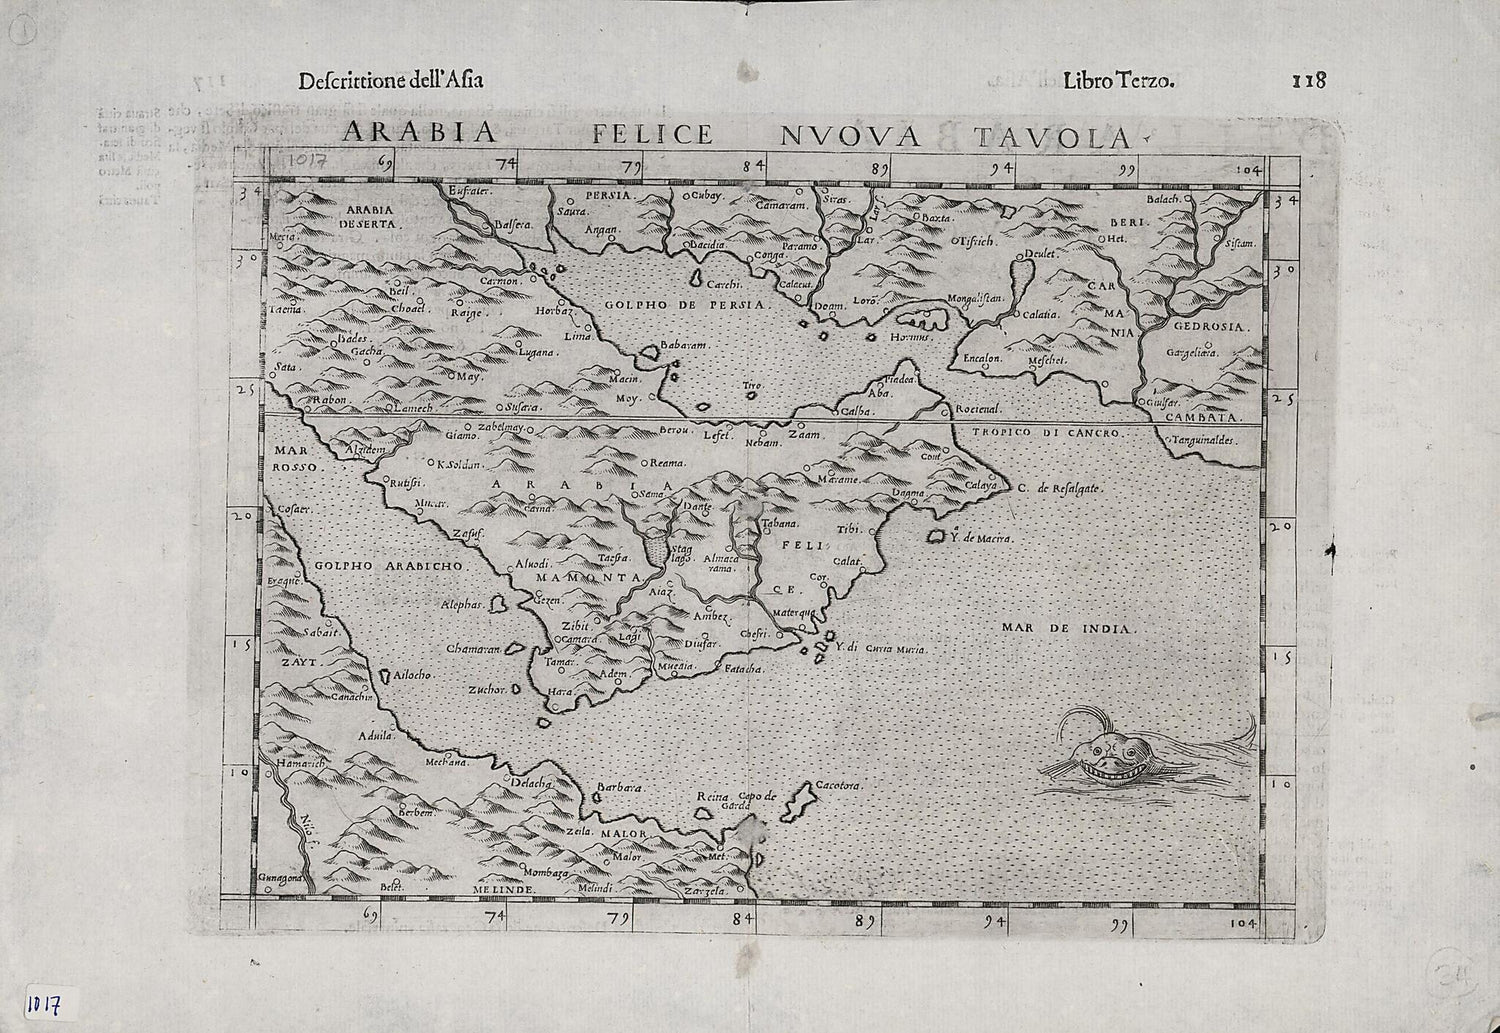 This old map of Eastern Arabian Peninsula). (Arabia Felice Nvova Tavola) from 1561 was created by Giacomo Gastaldi, Girolamo Ruscelli in 1561